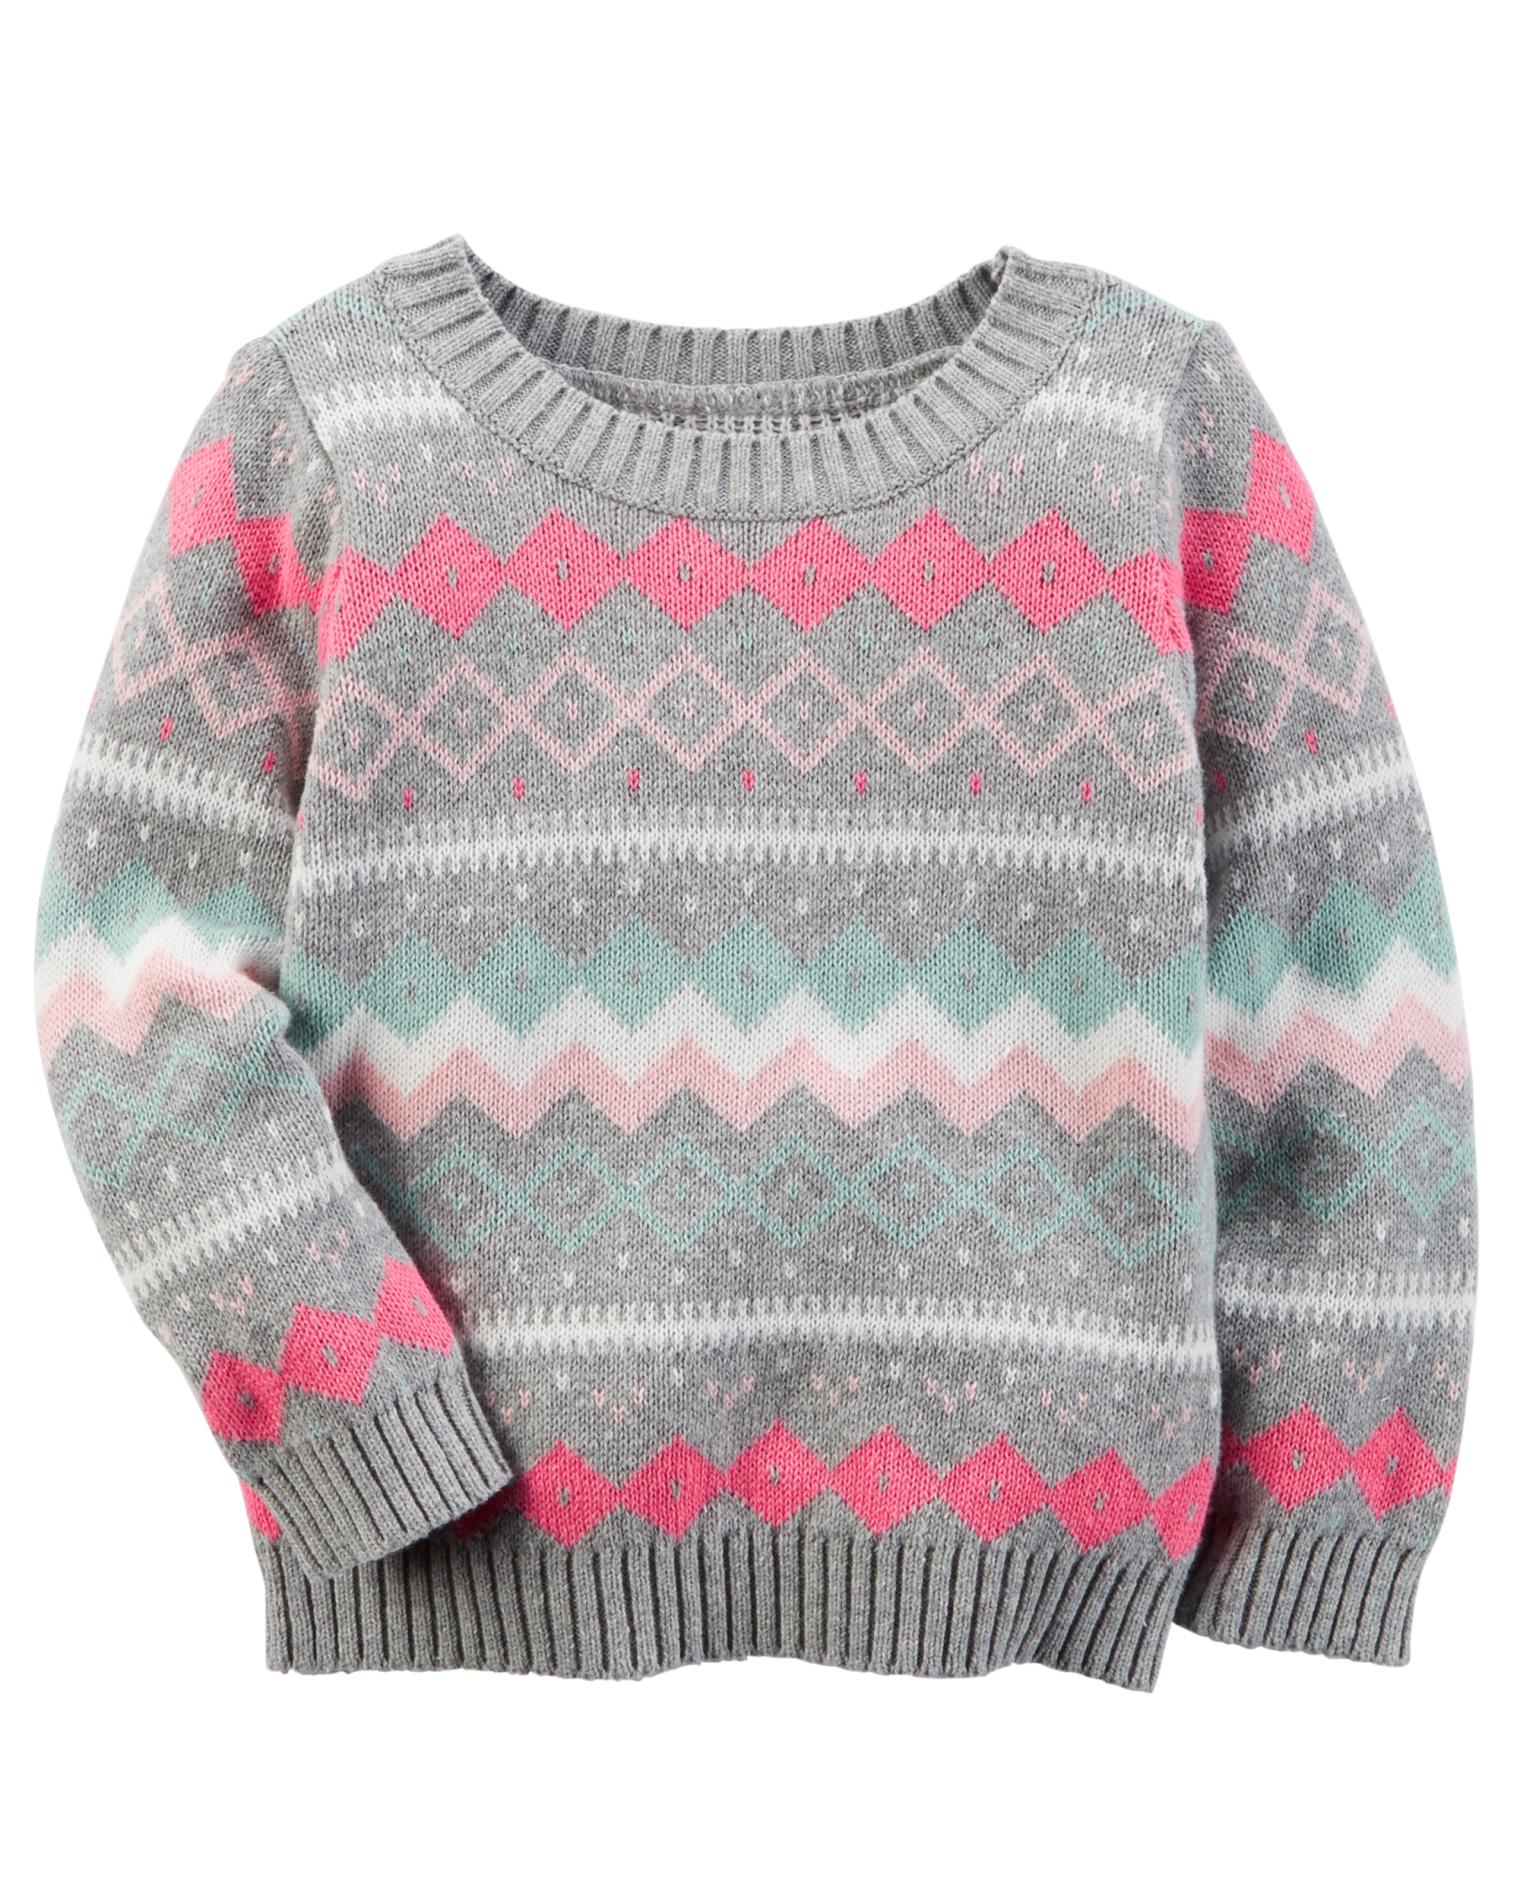 Carter's Toddler Girls' Sweater - Geometric